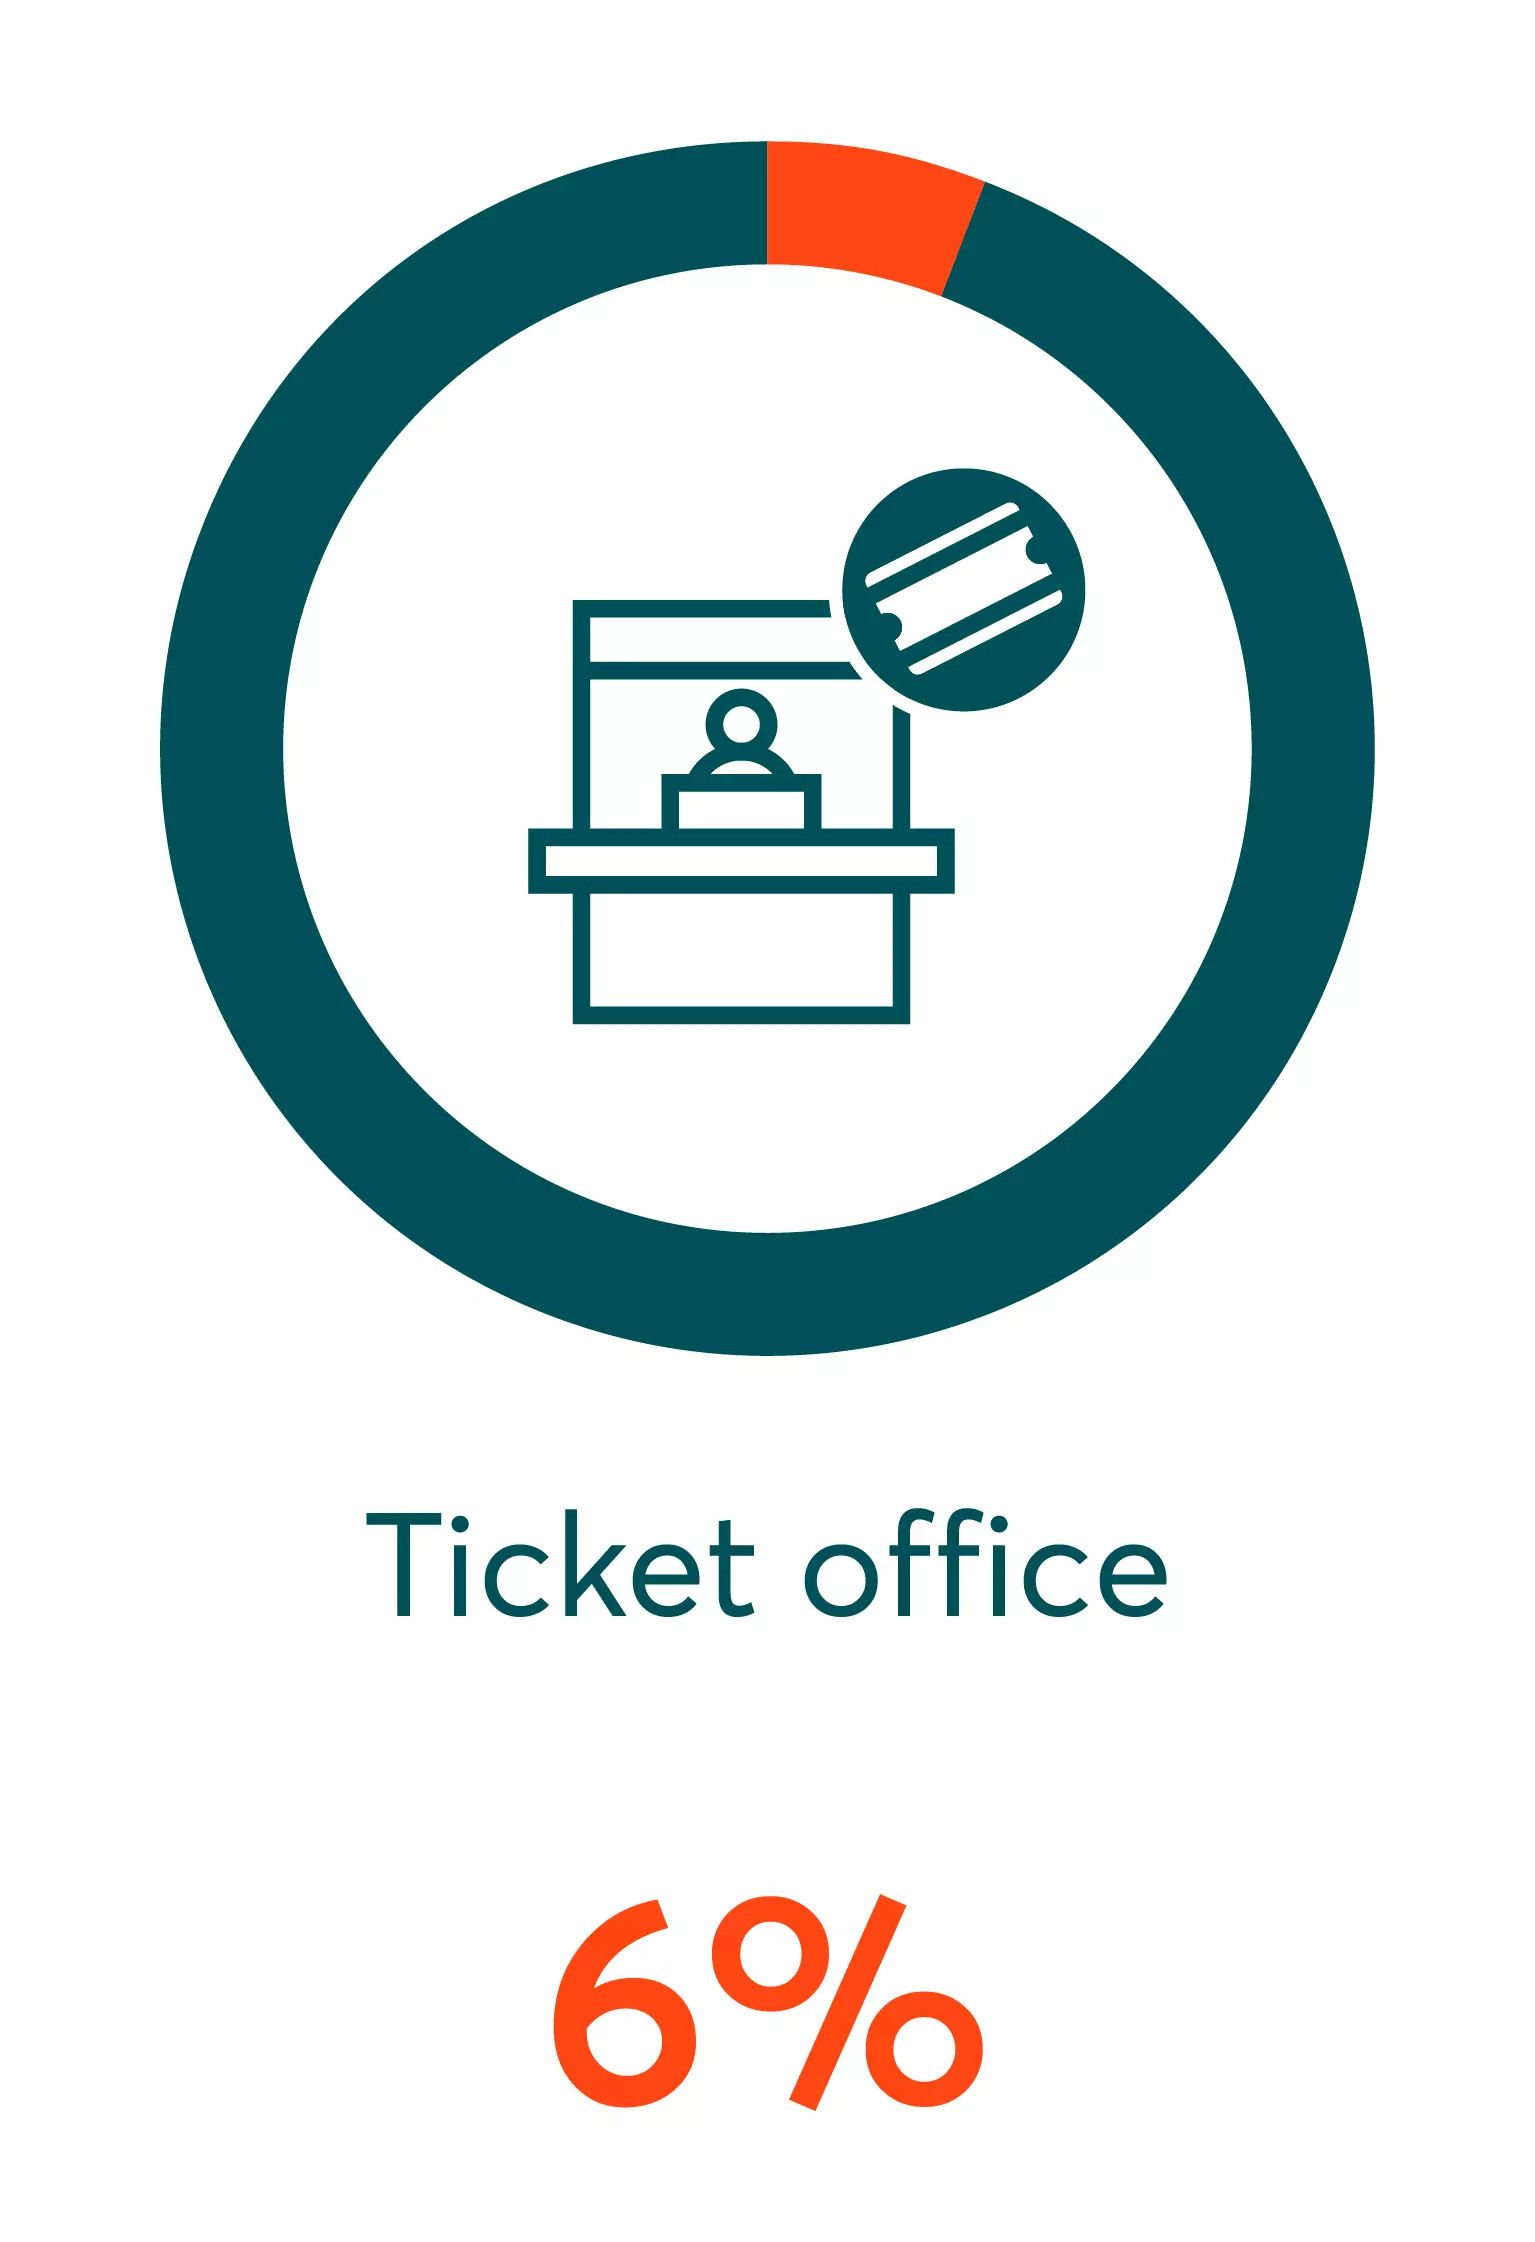 Ticket office summary image